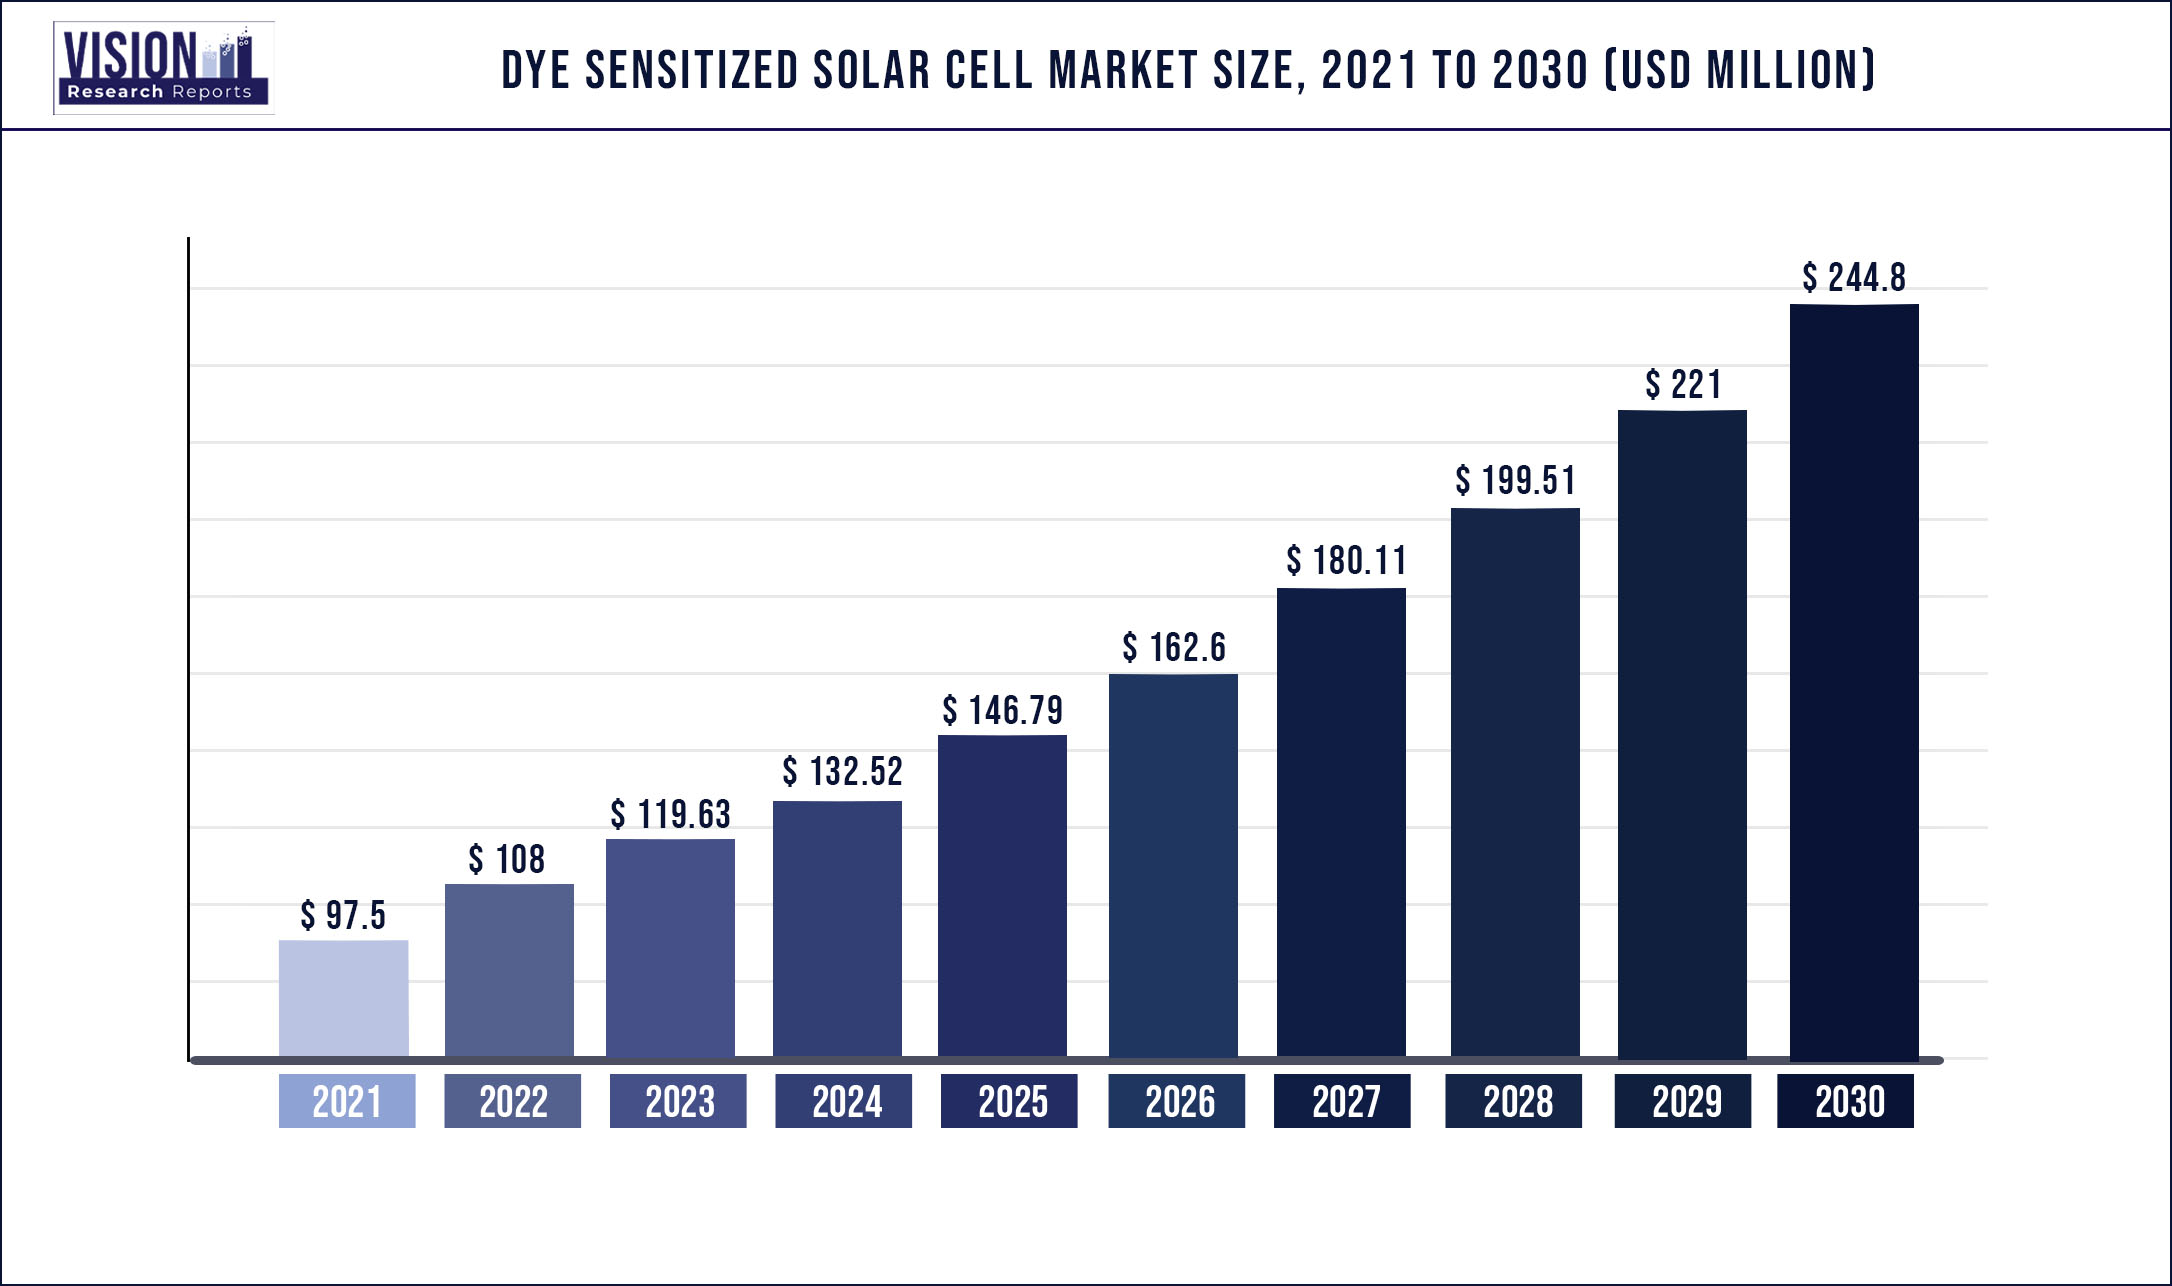 Dye Sensitized Solar Cell Market Size 2021 to 2030